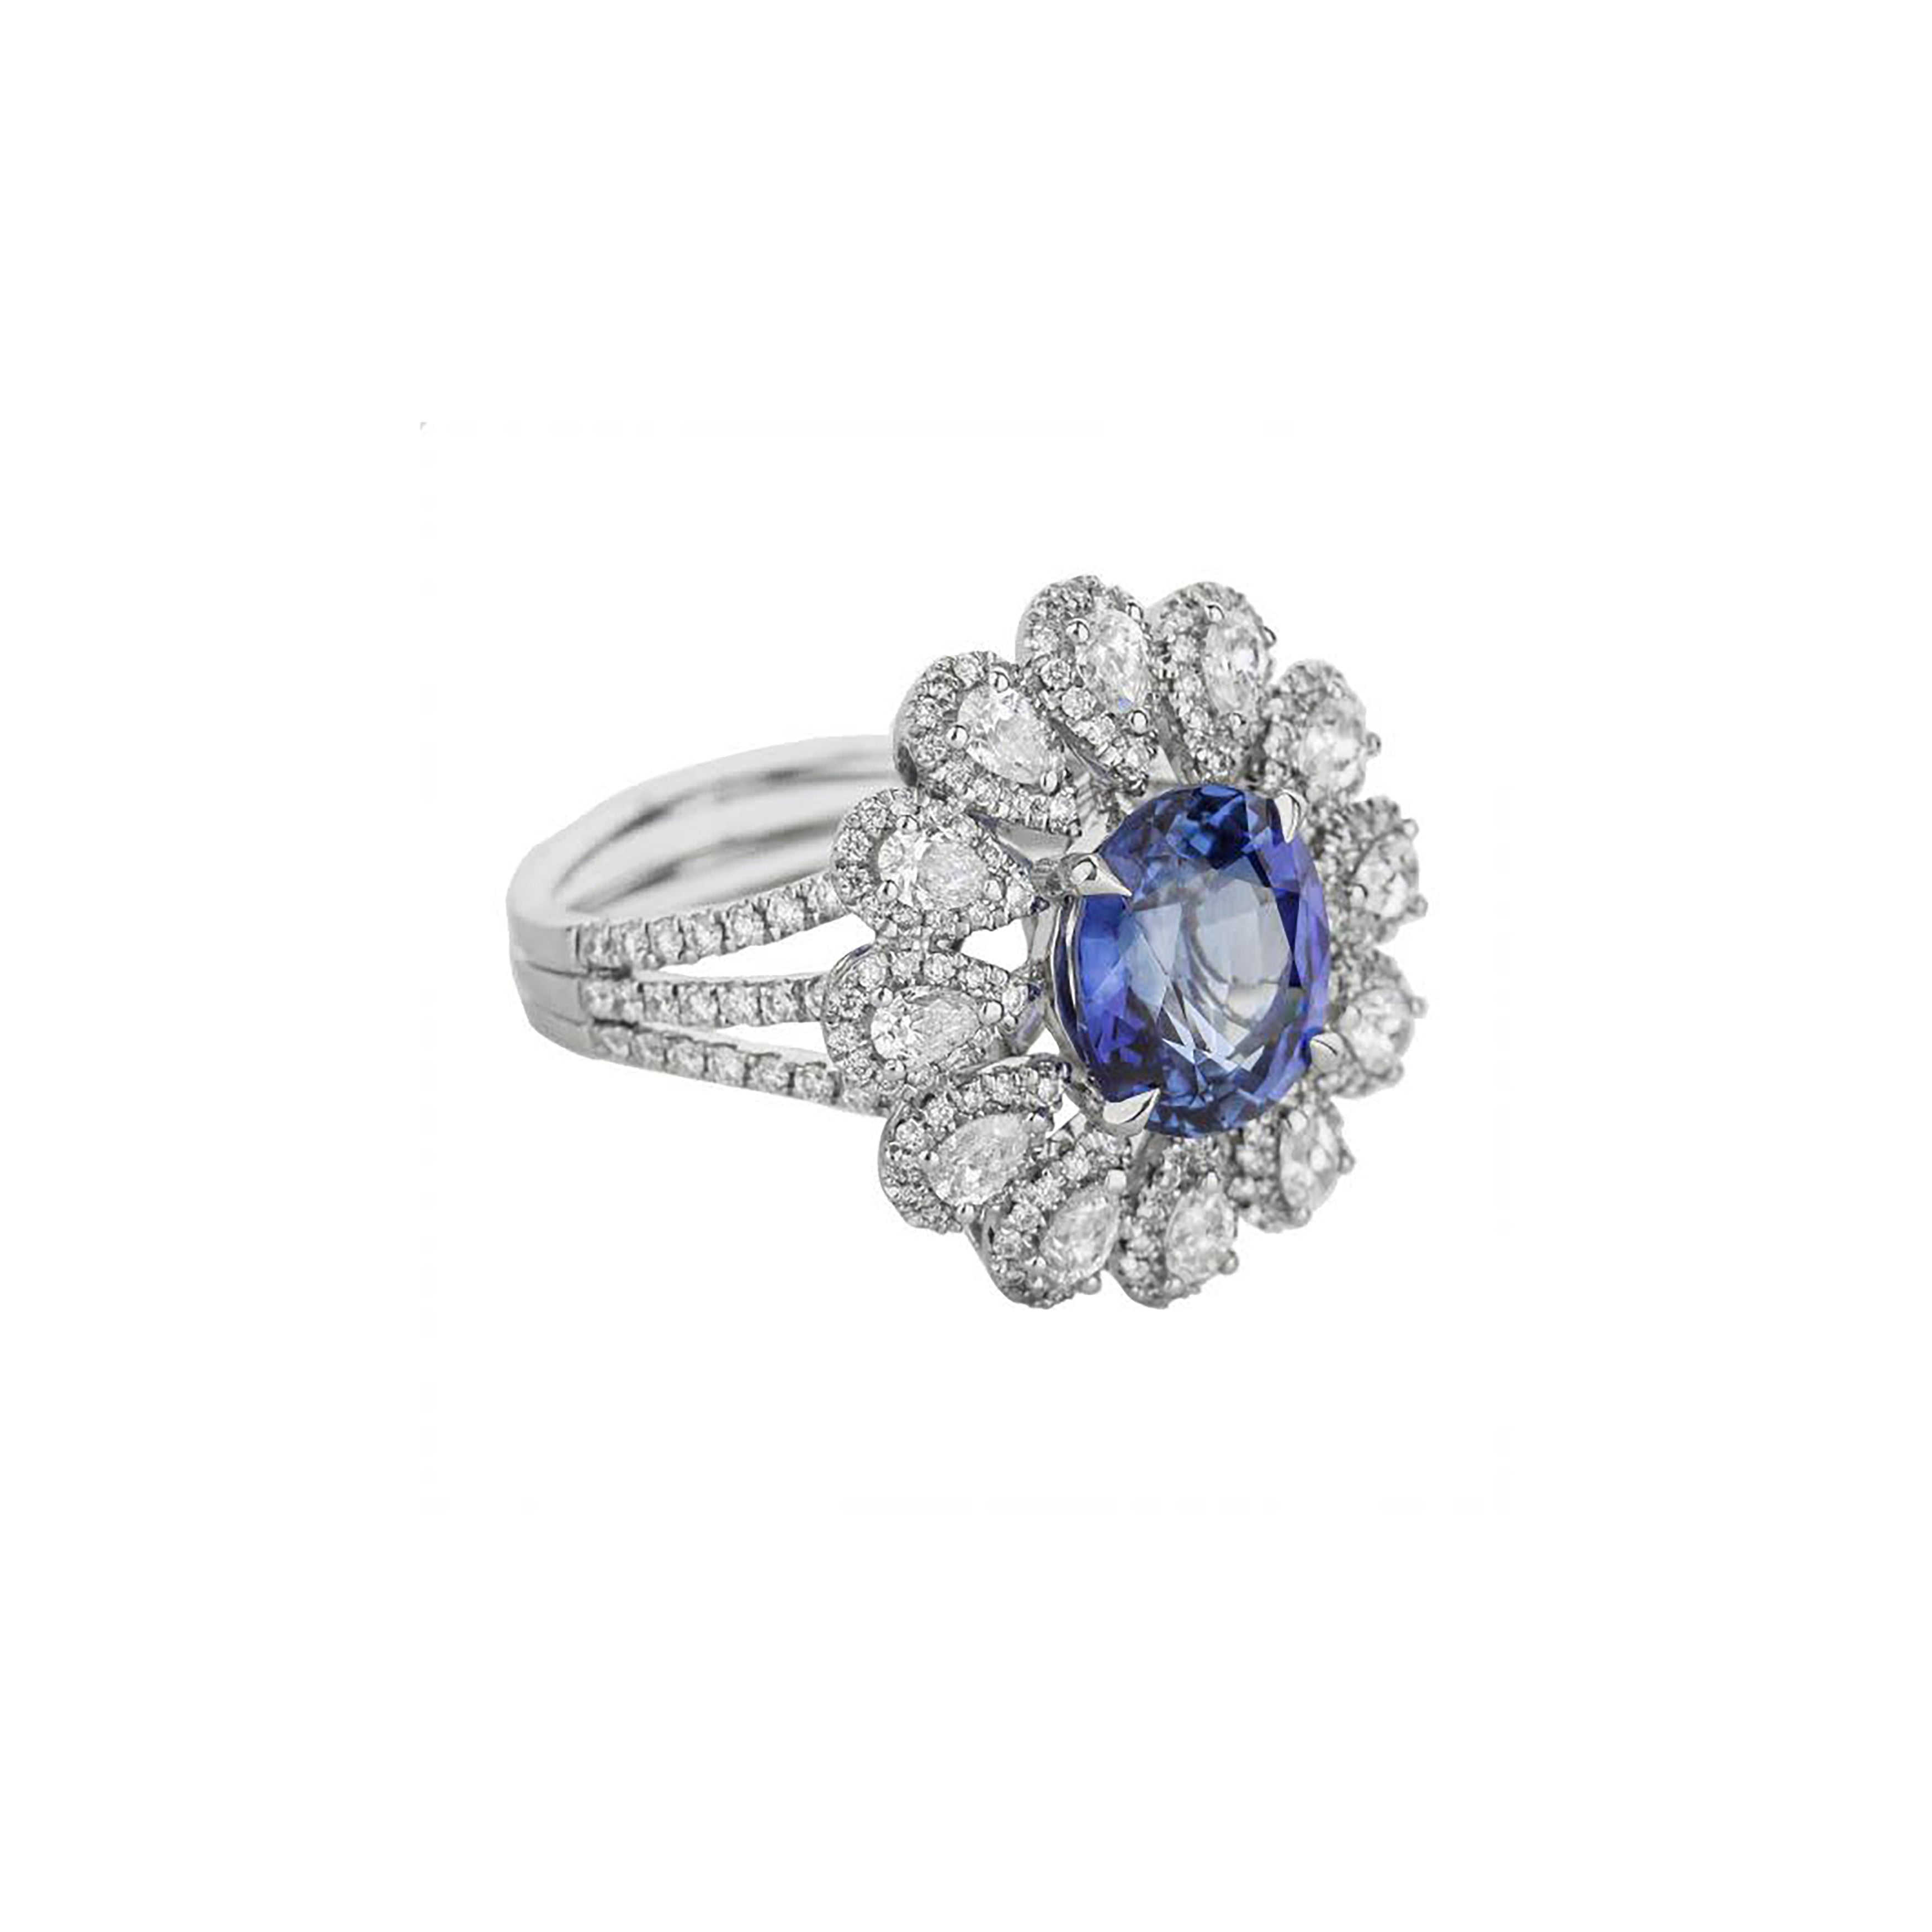 18K White Gold Oval Blue Sapphire & Diamond Flower Cocktail Ring